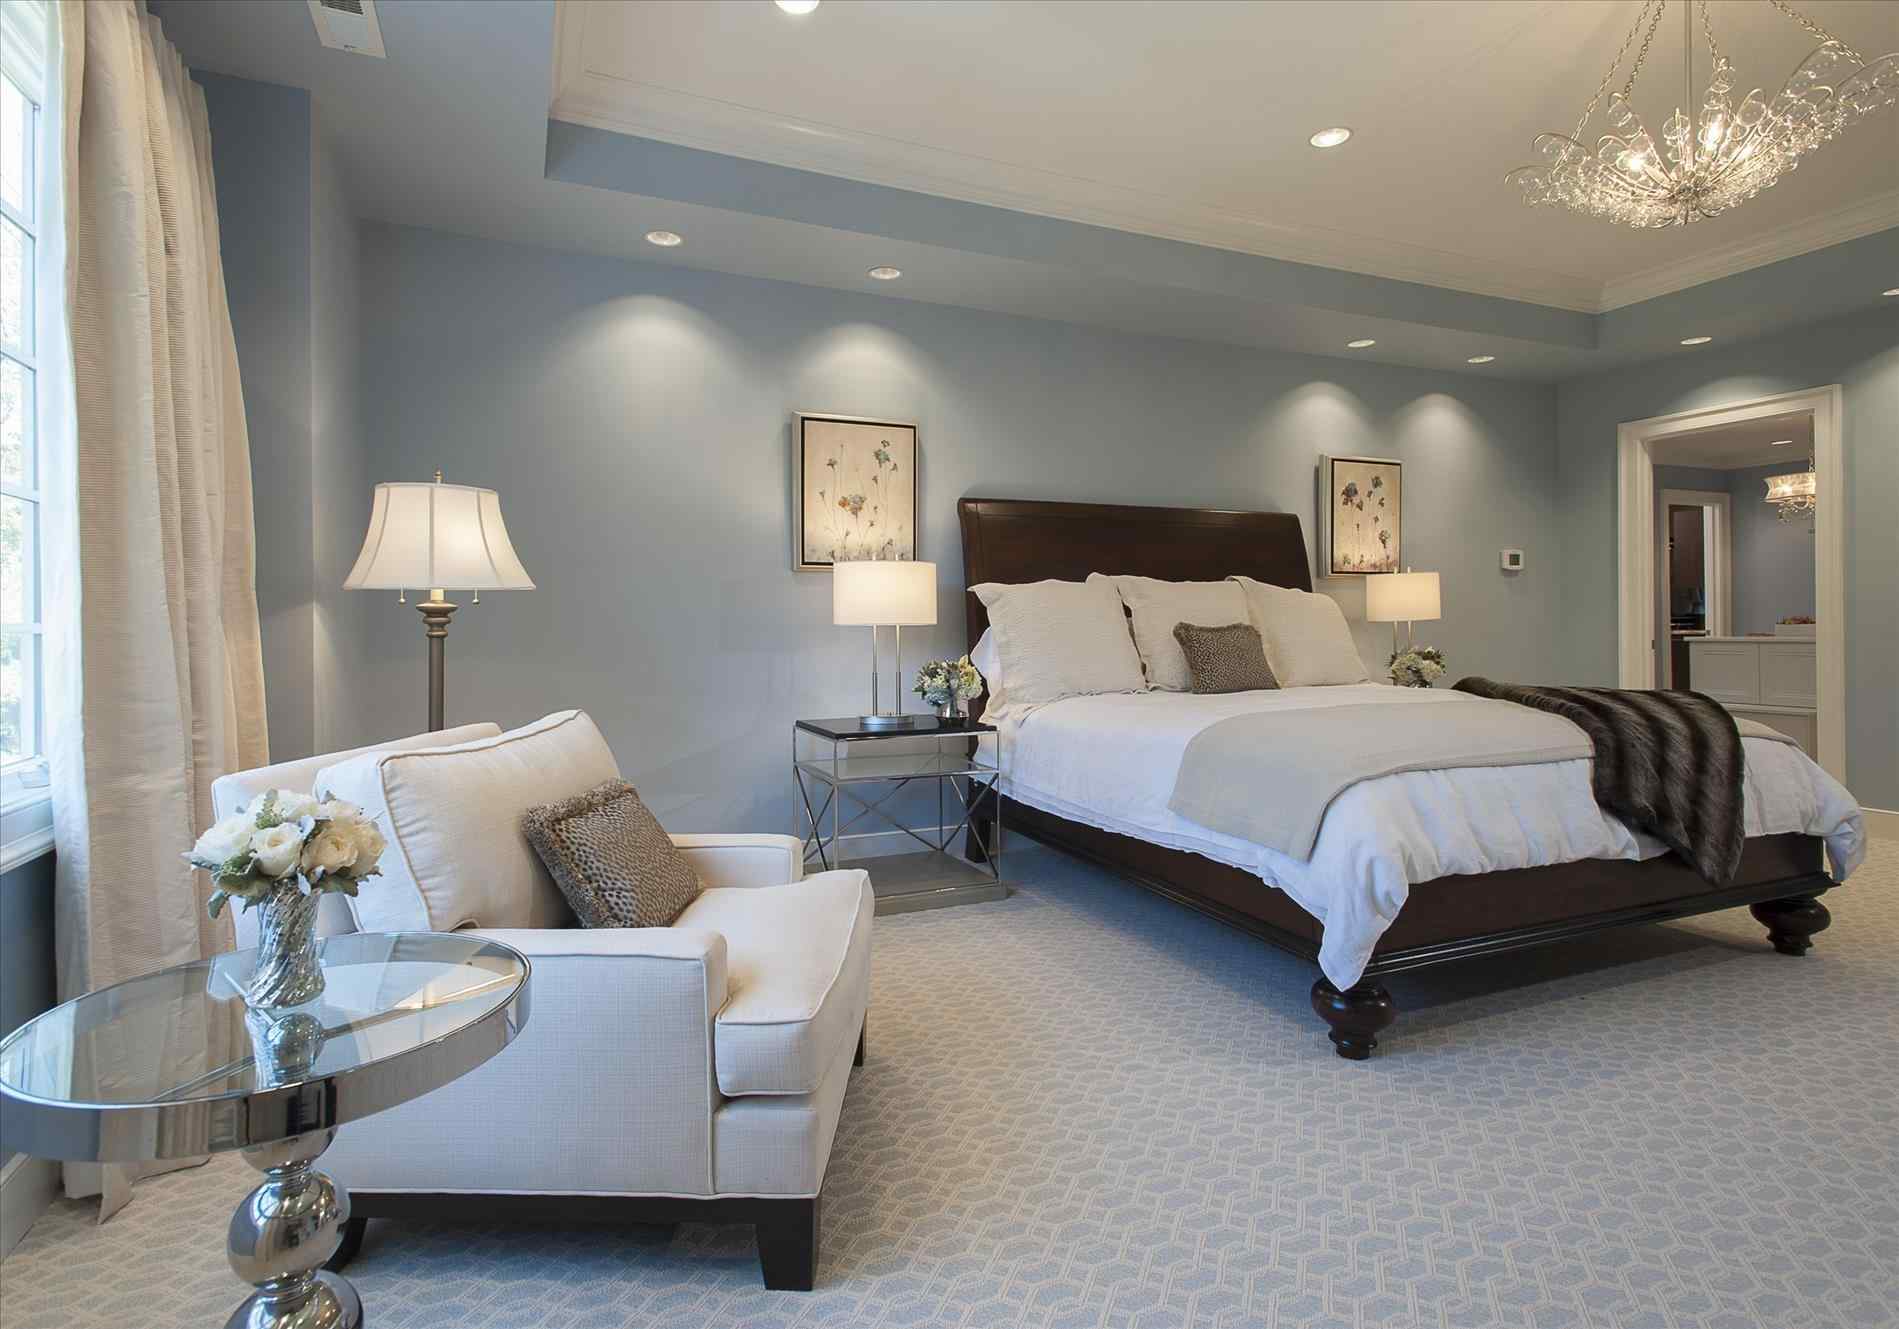 blue walls grey bedroom furniture